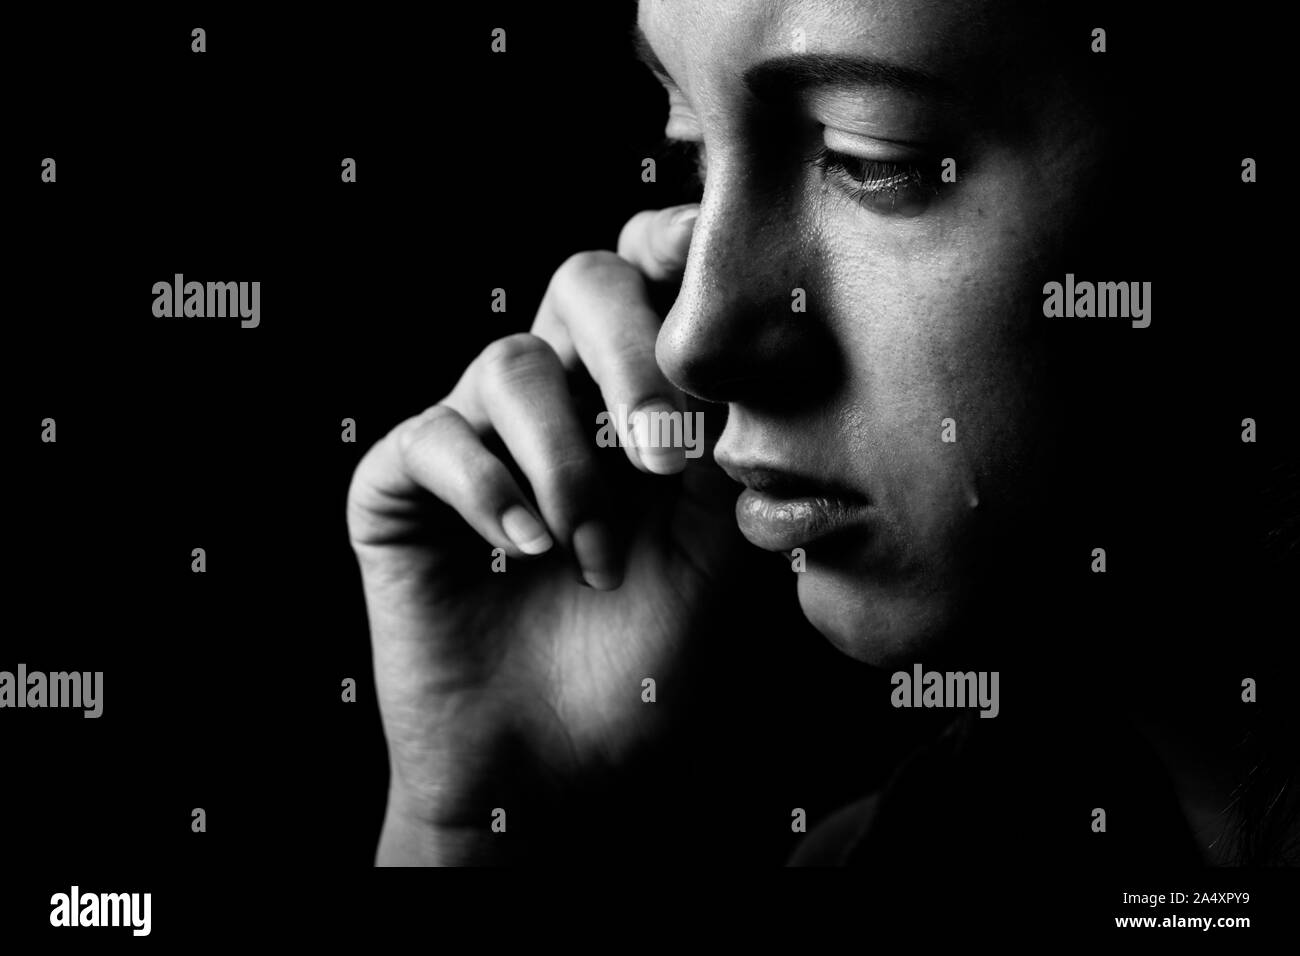 sad woman crying on black background, looking down, closeup portrait, monochrome Stock Photo